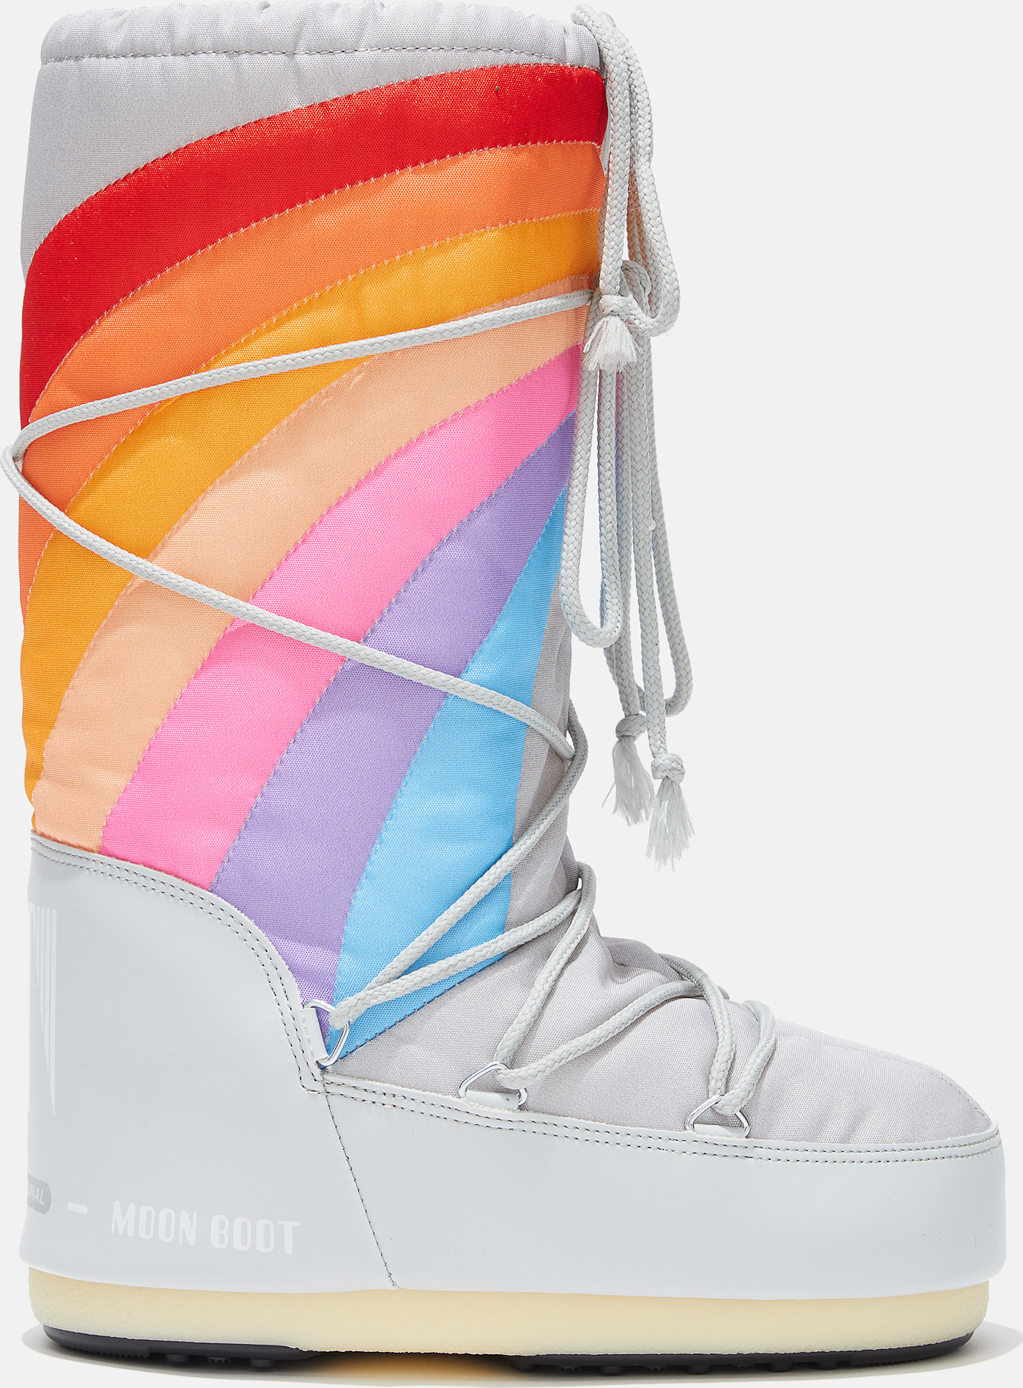 Zimní boty MOON BOOT Icon rainbow duhové Velikost: EU 35/38